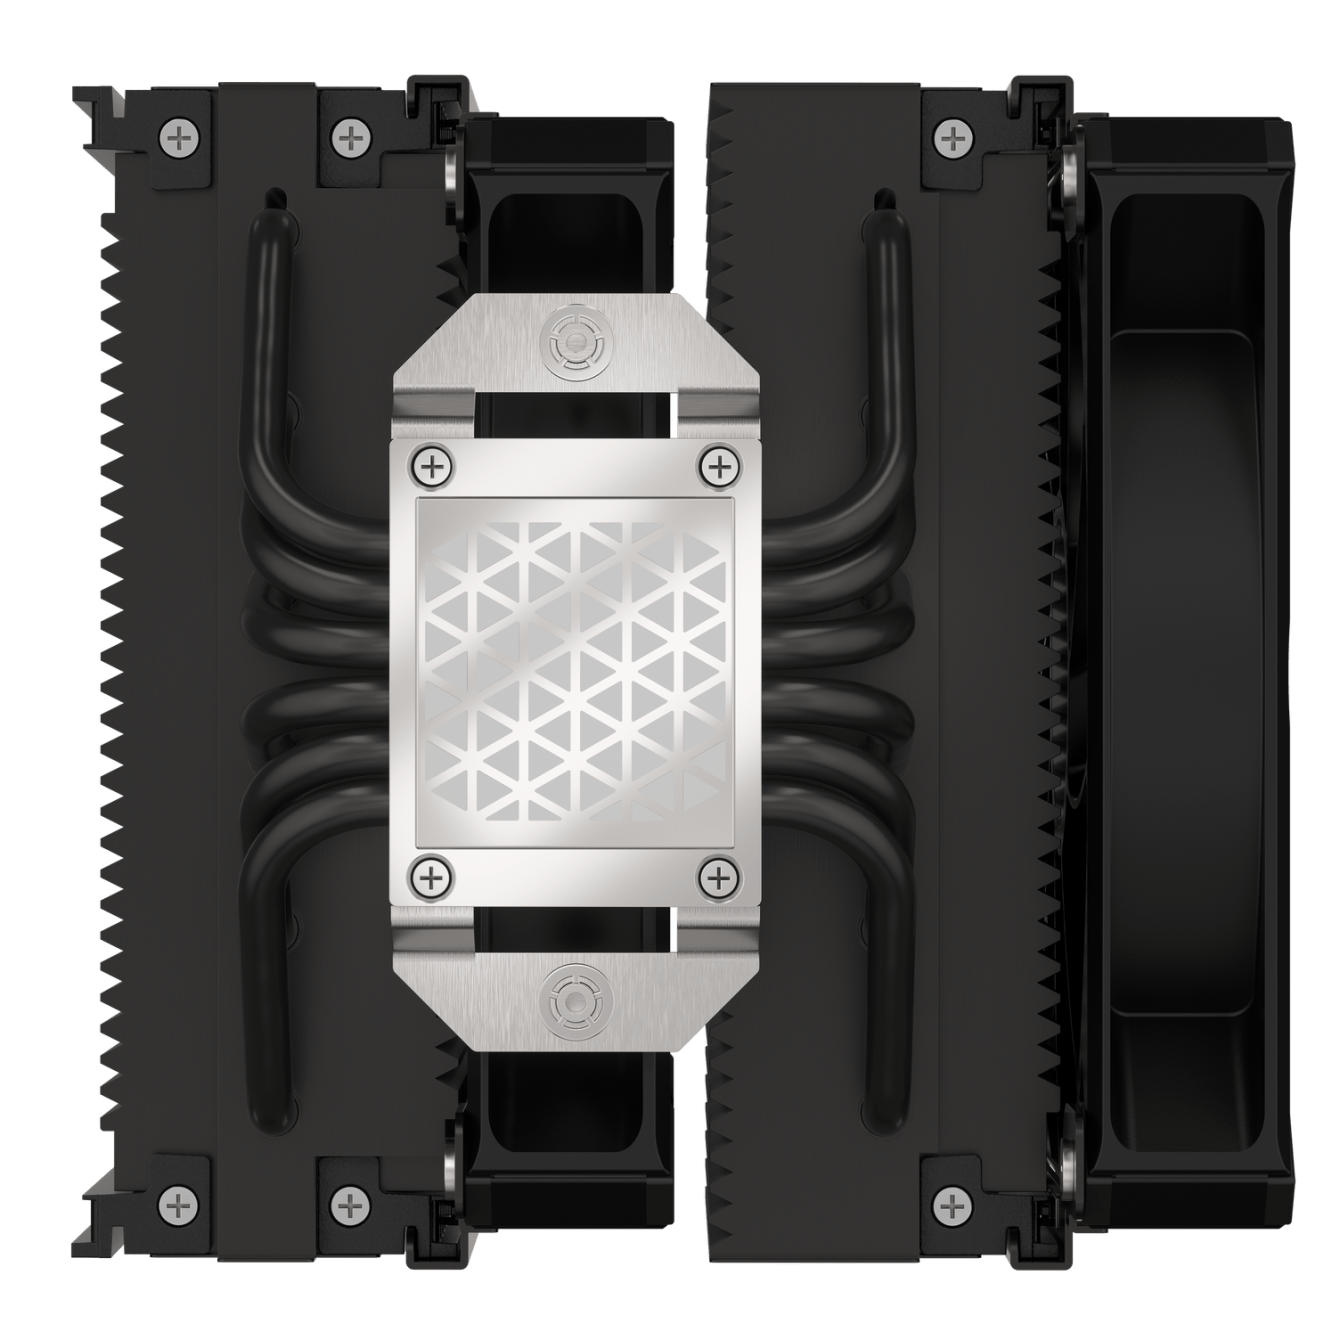 CORSAIR reveals A115 Tower: new CPU air cooler